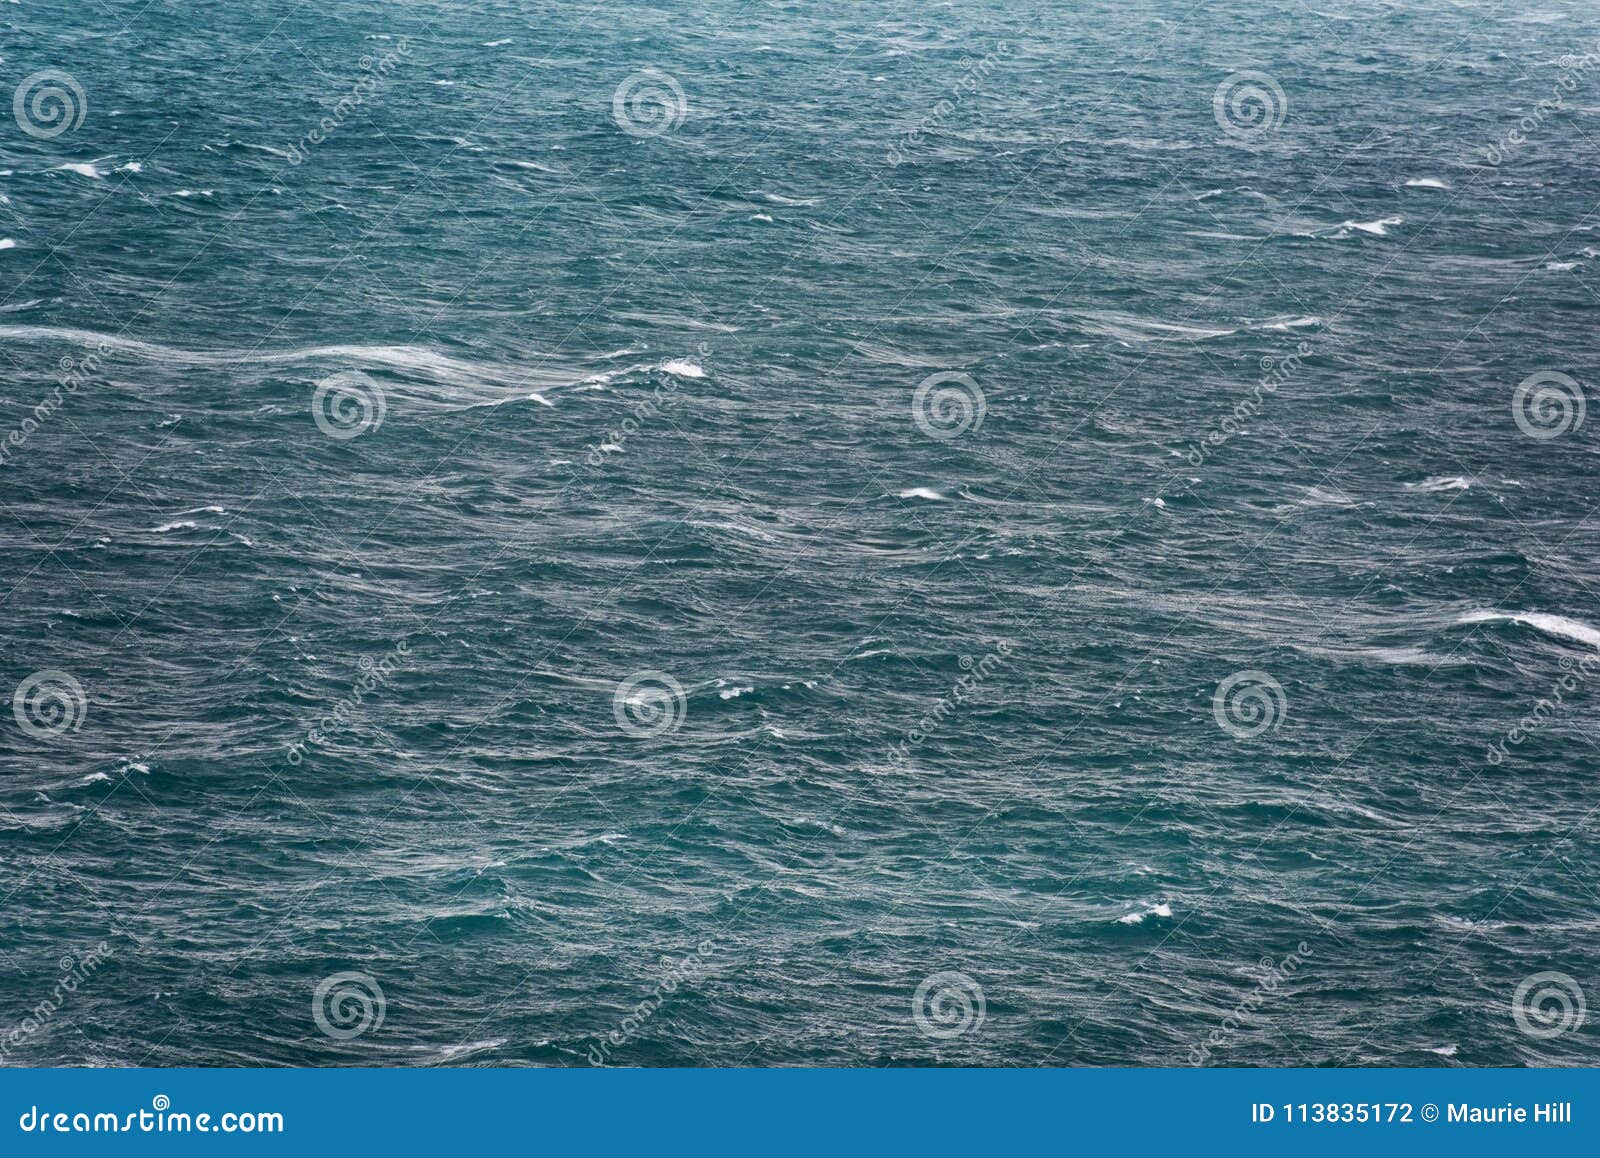 Image result for ocean whitecaps